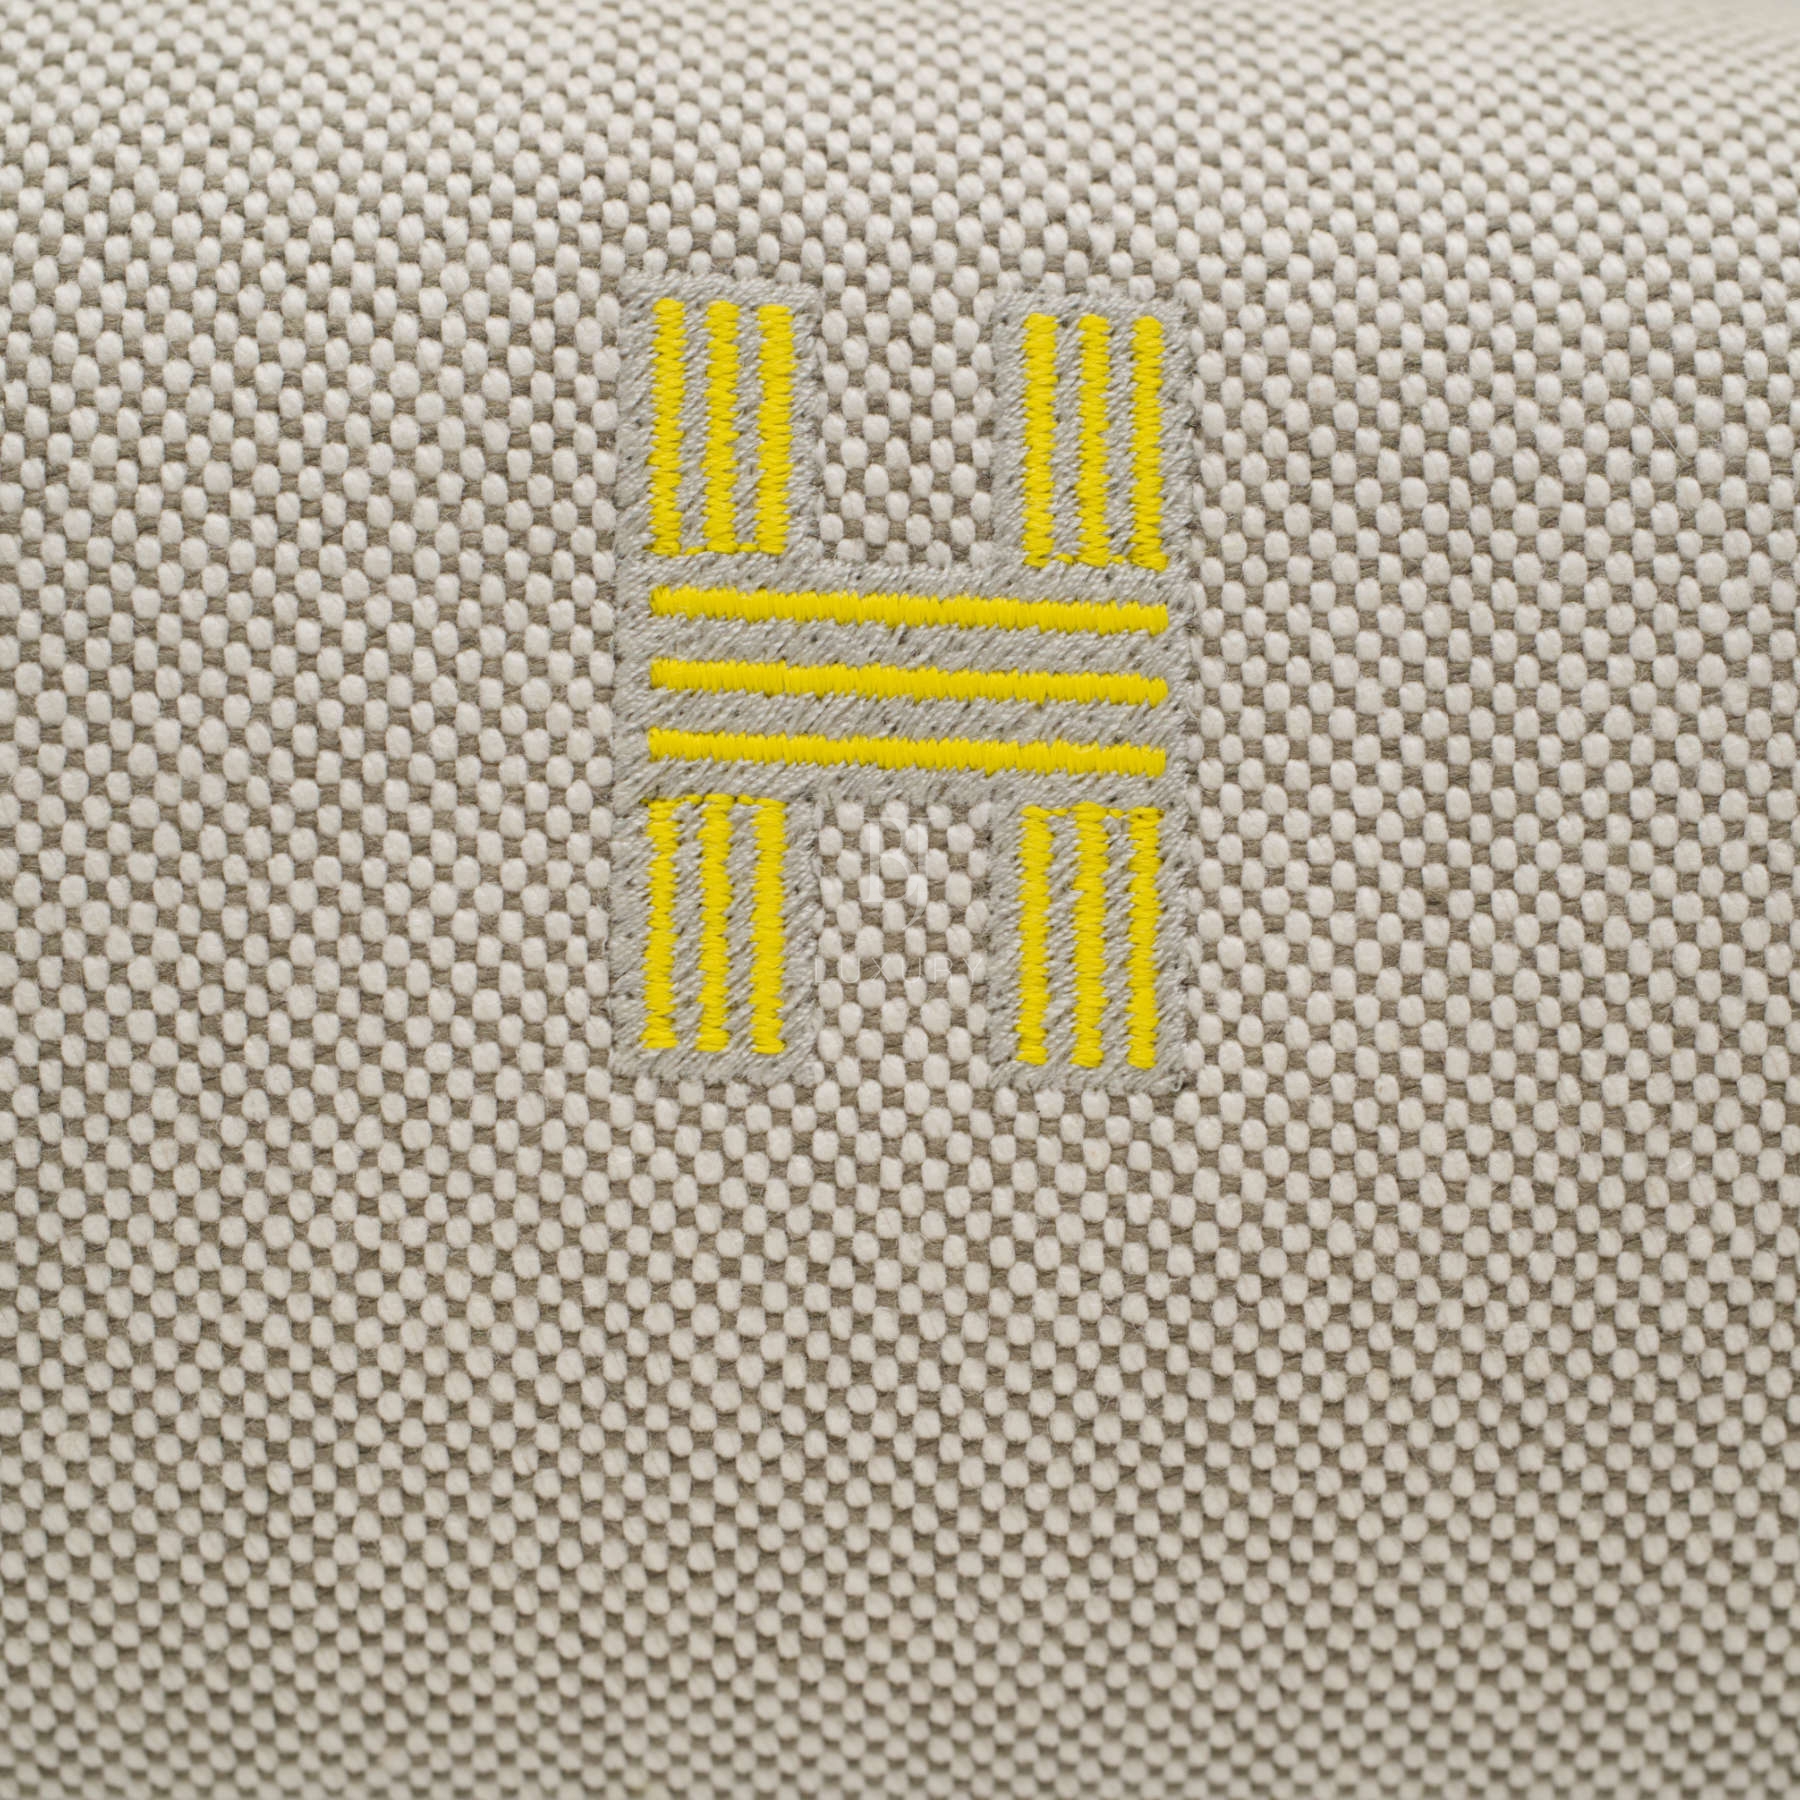 HERMES-BRIDEABRAC-BEIGE-CANVAS-4278 logo.jpg